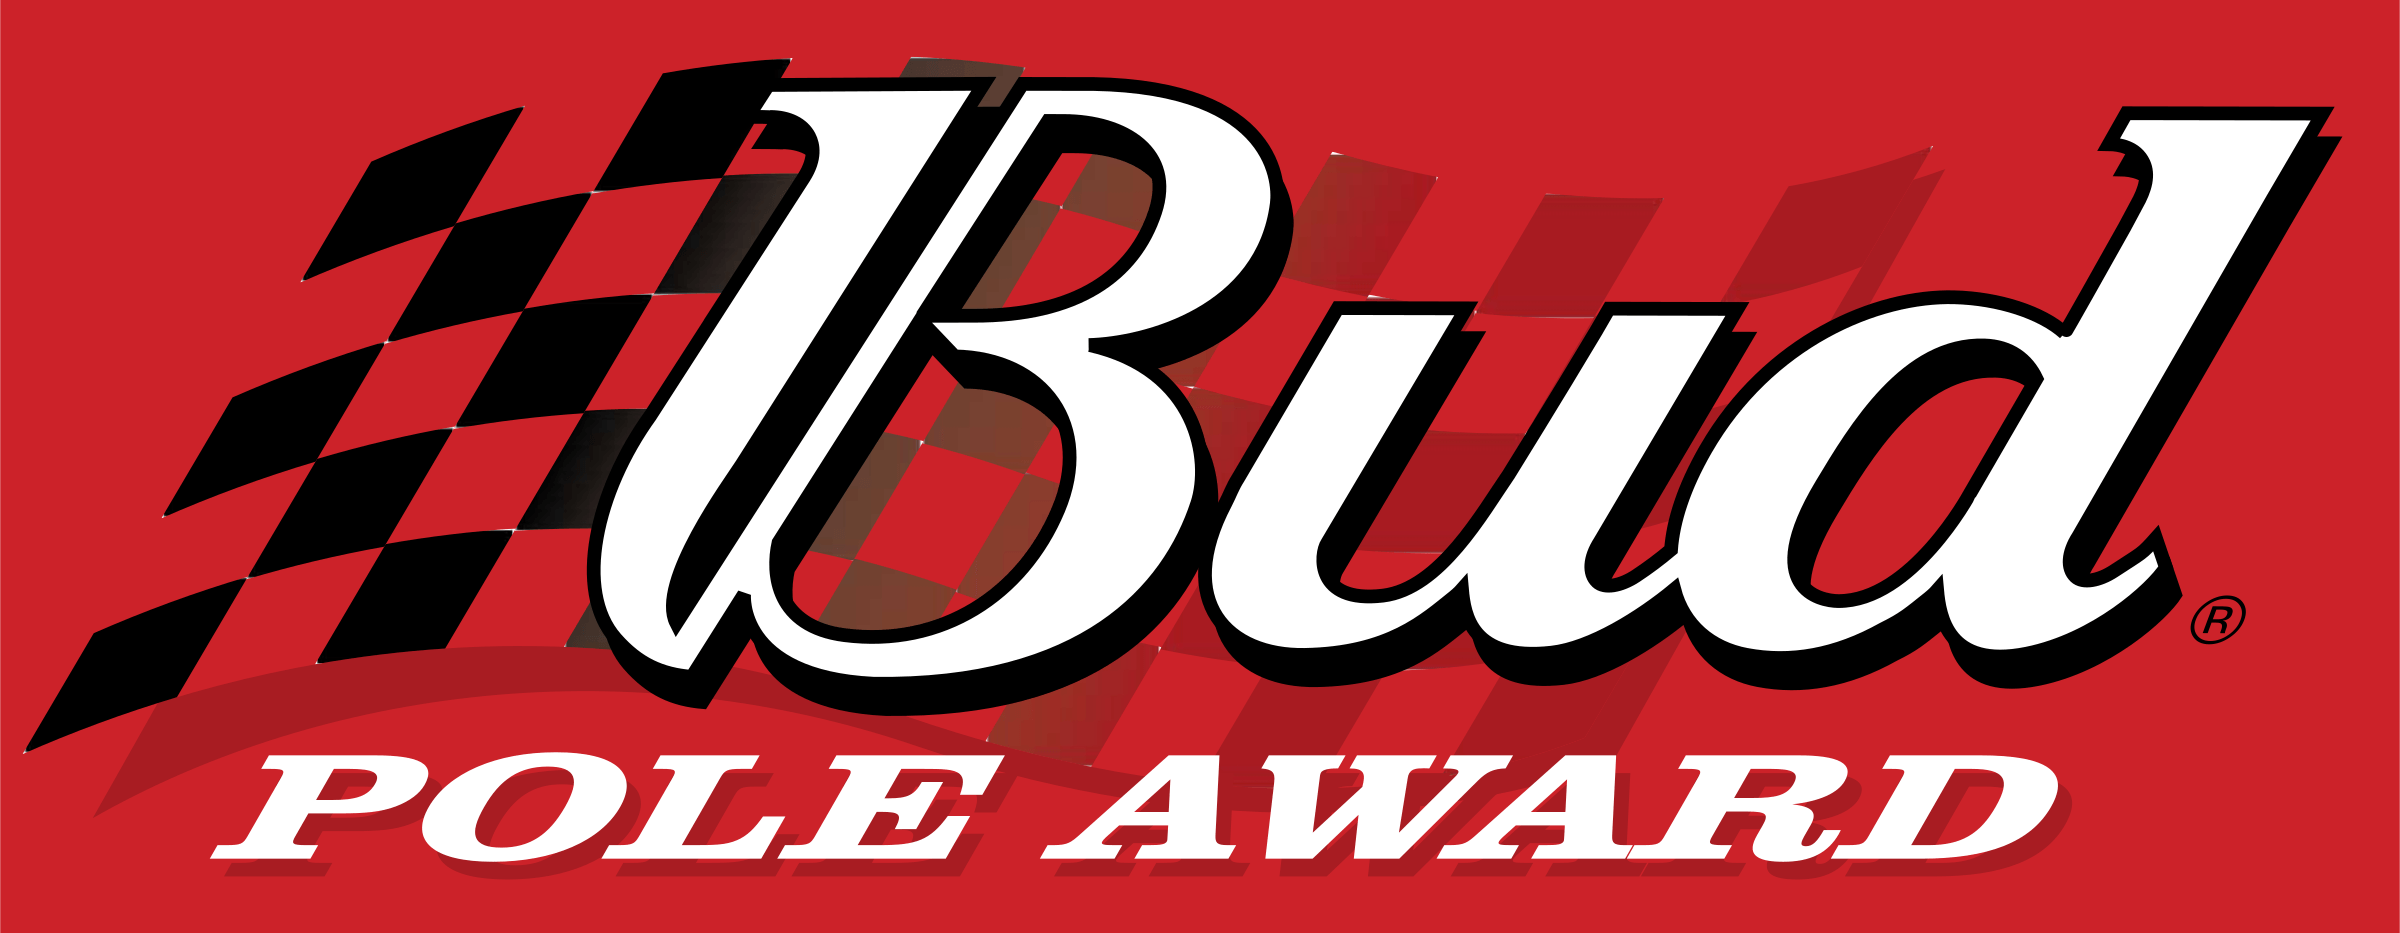 Bud Logo - Bud Pole Award Logo PNG Transparent & SVG Vector - Freebie Supply